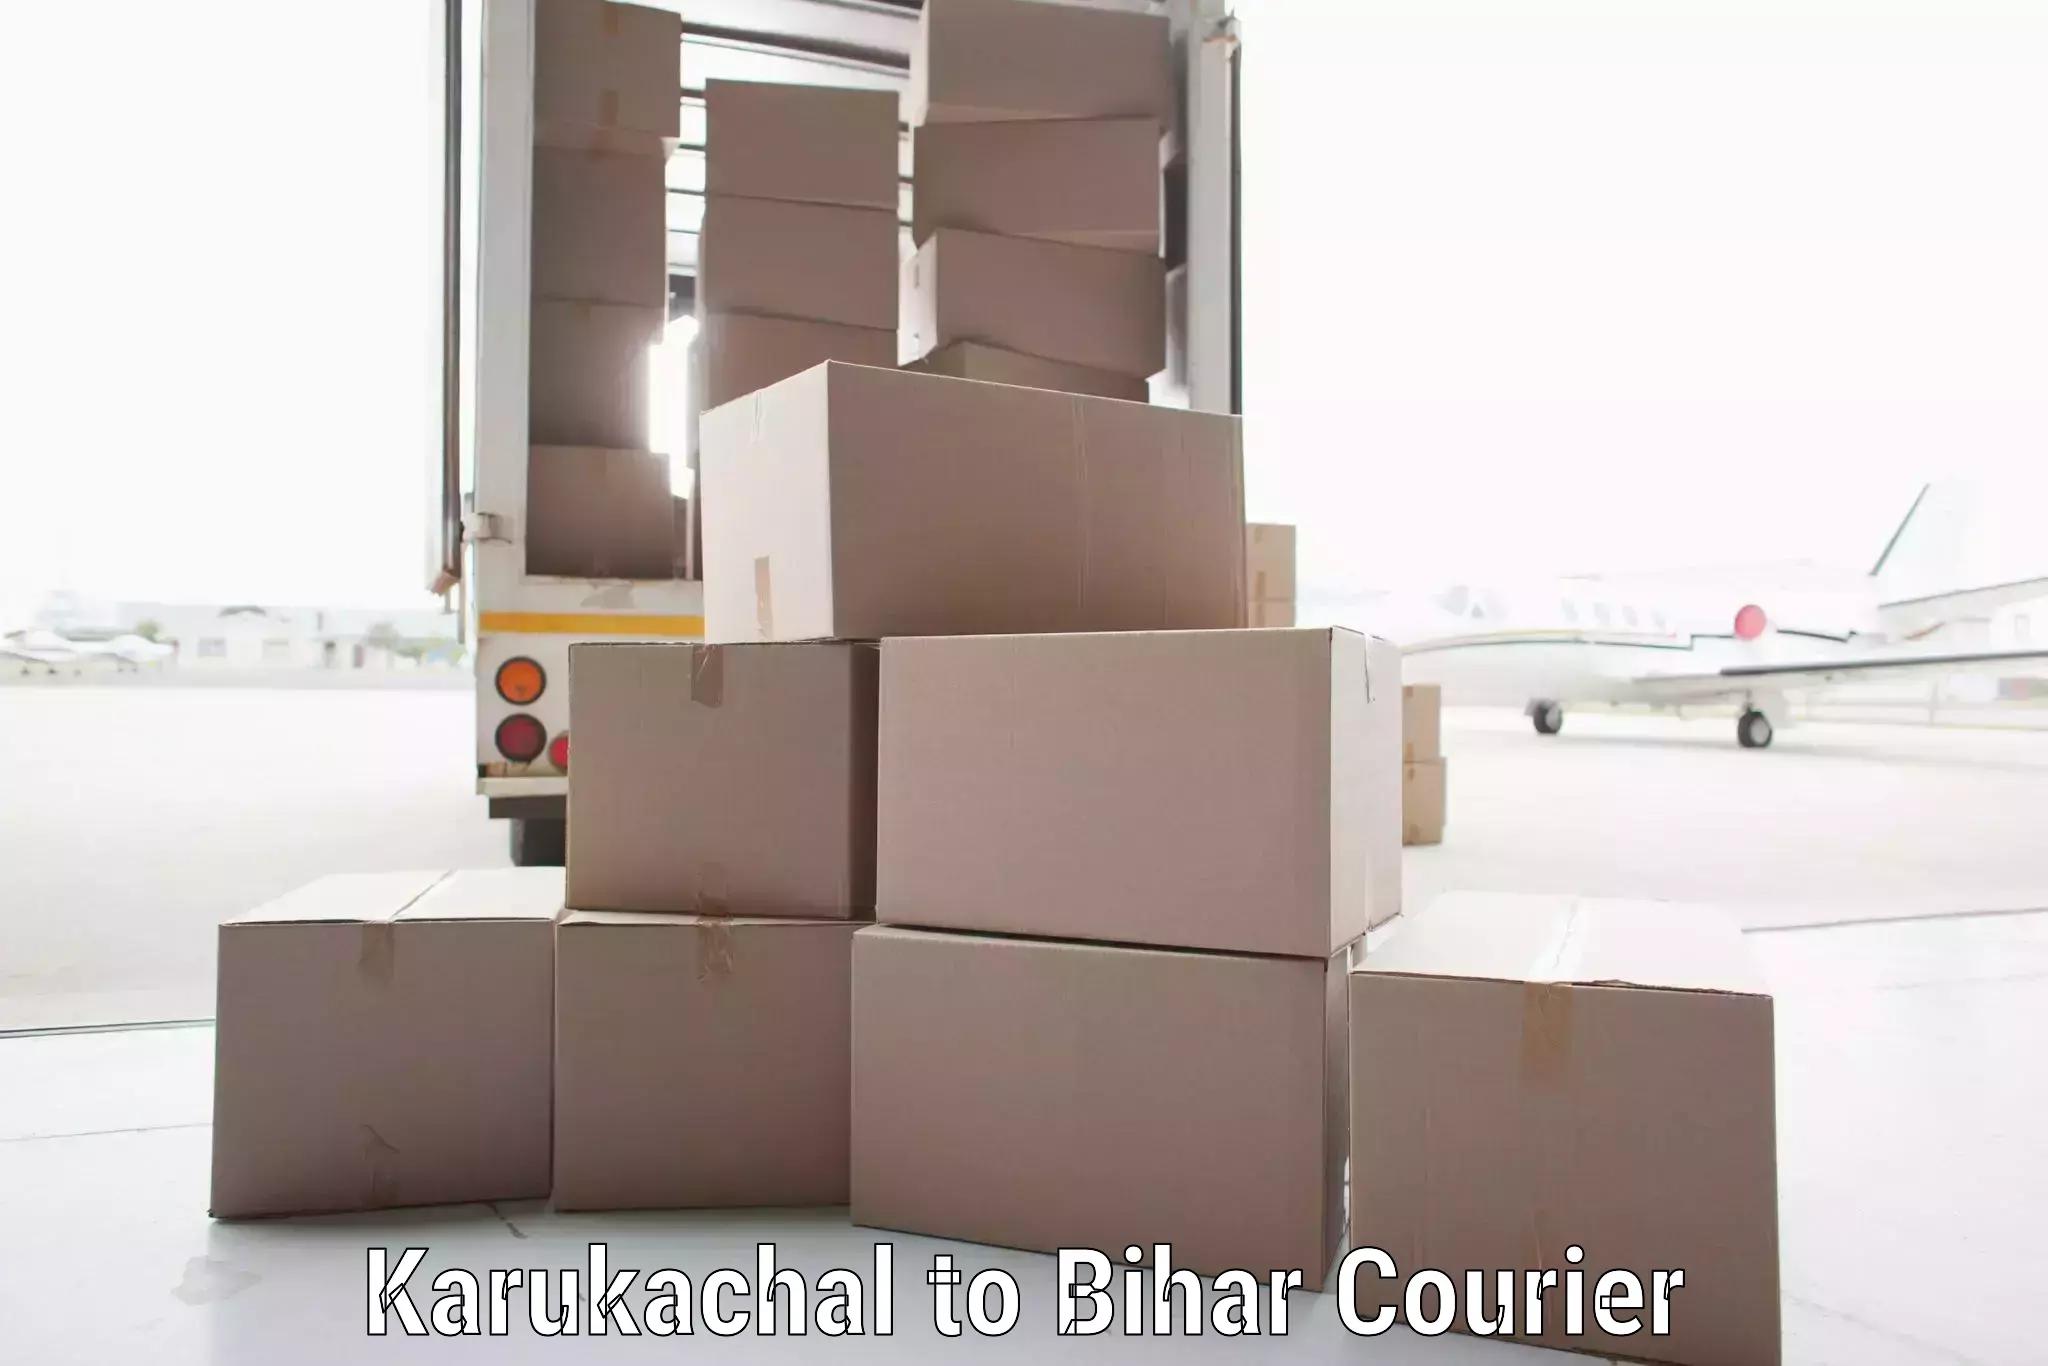 On-demand shipping options Karukachal to Patna